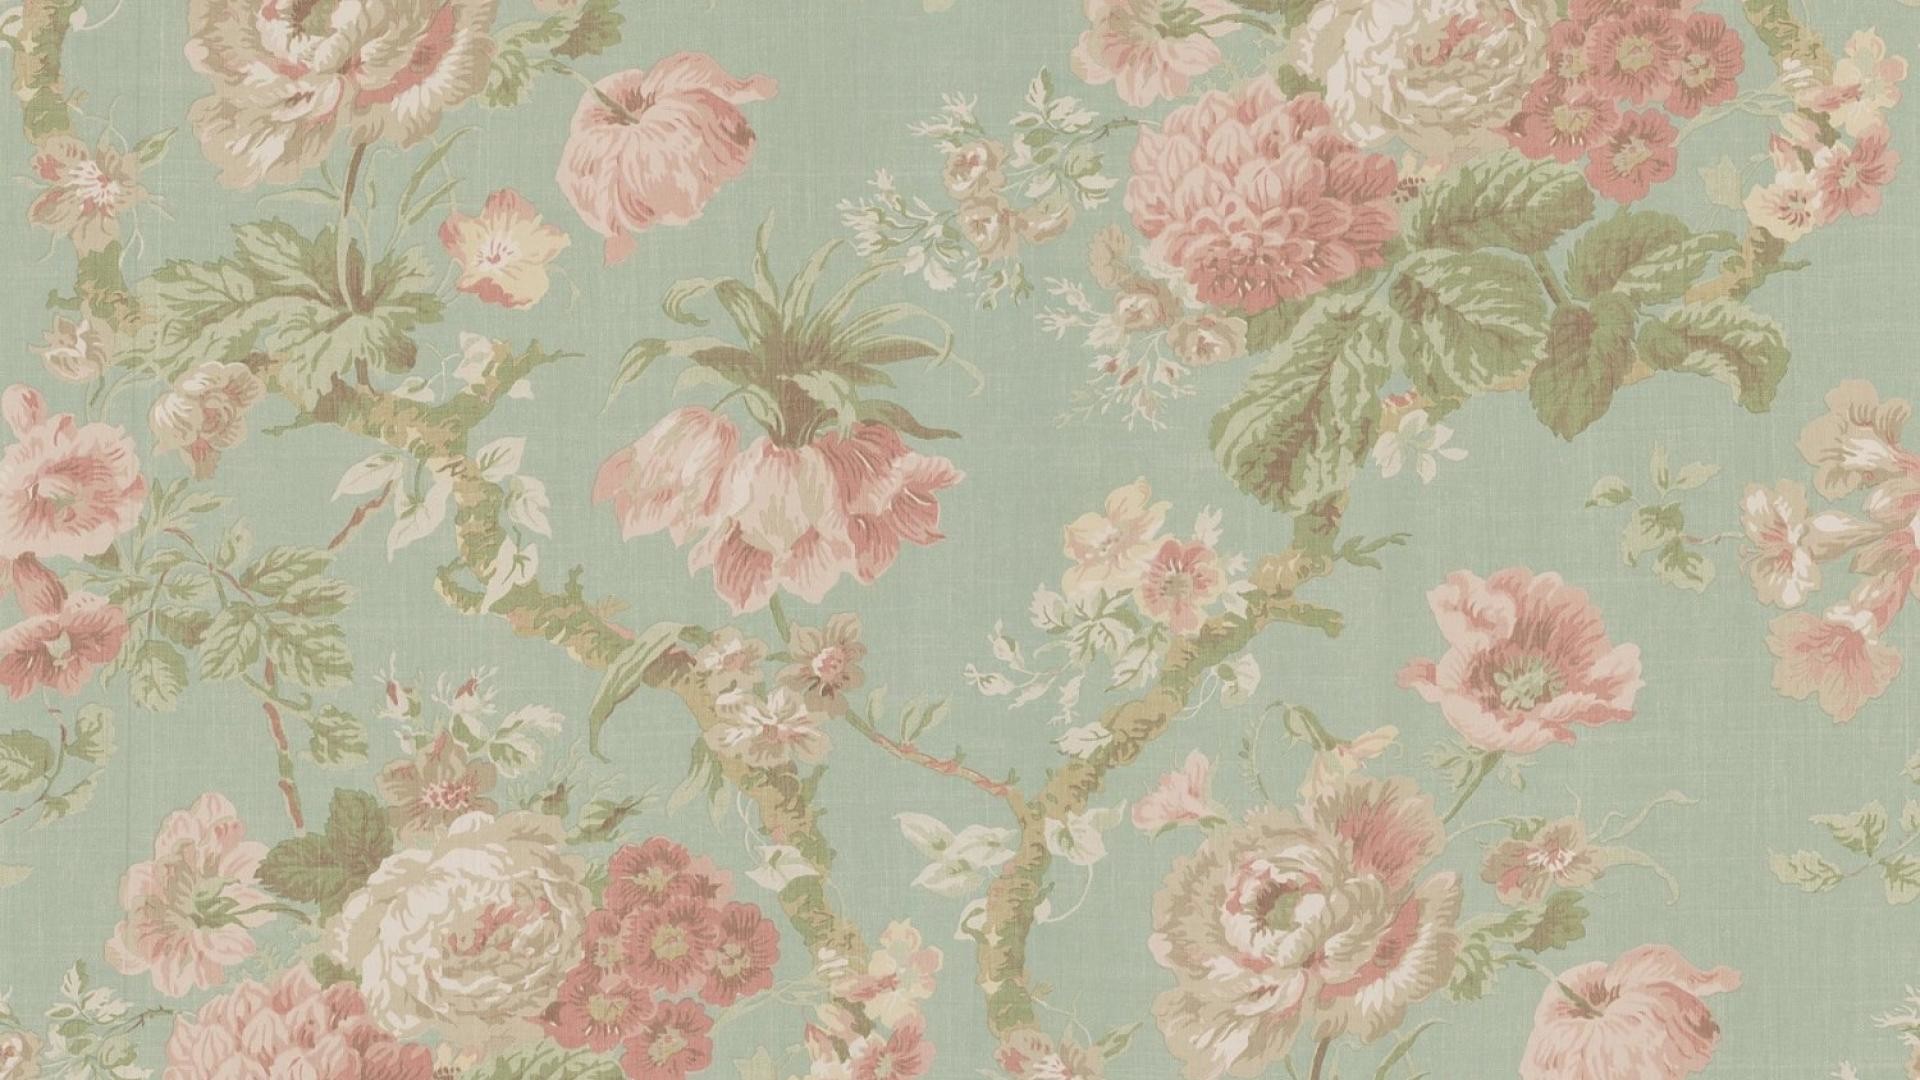 1920x1080 Wallpapers For > Retro Floral Desktop Wallpaper